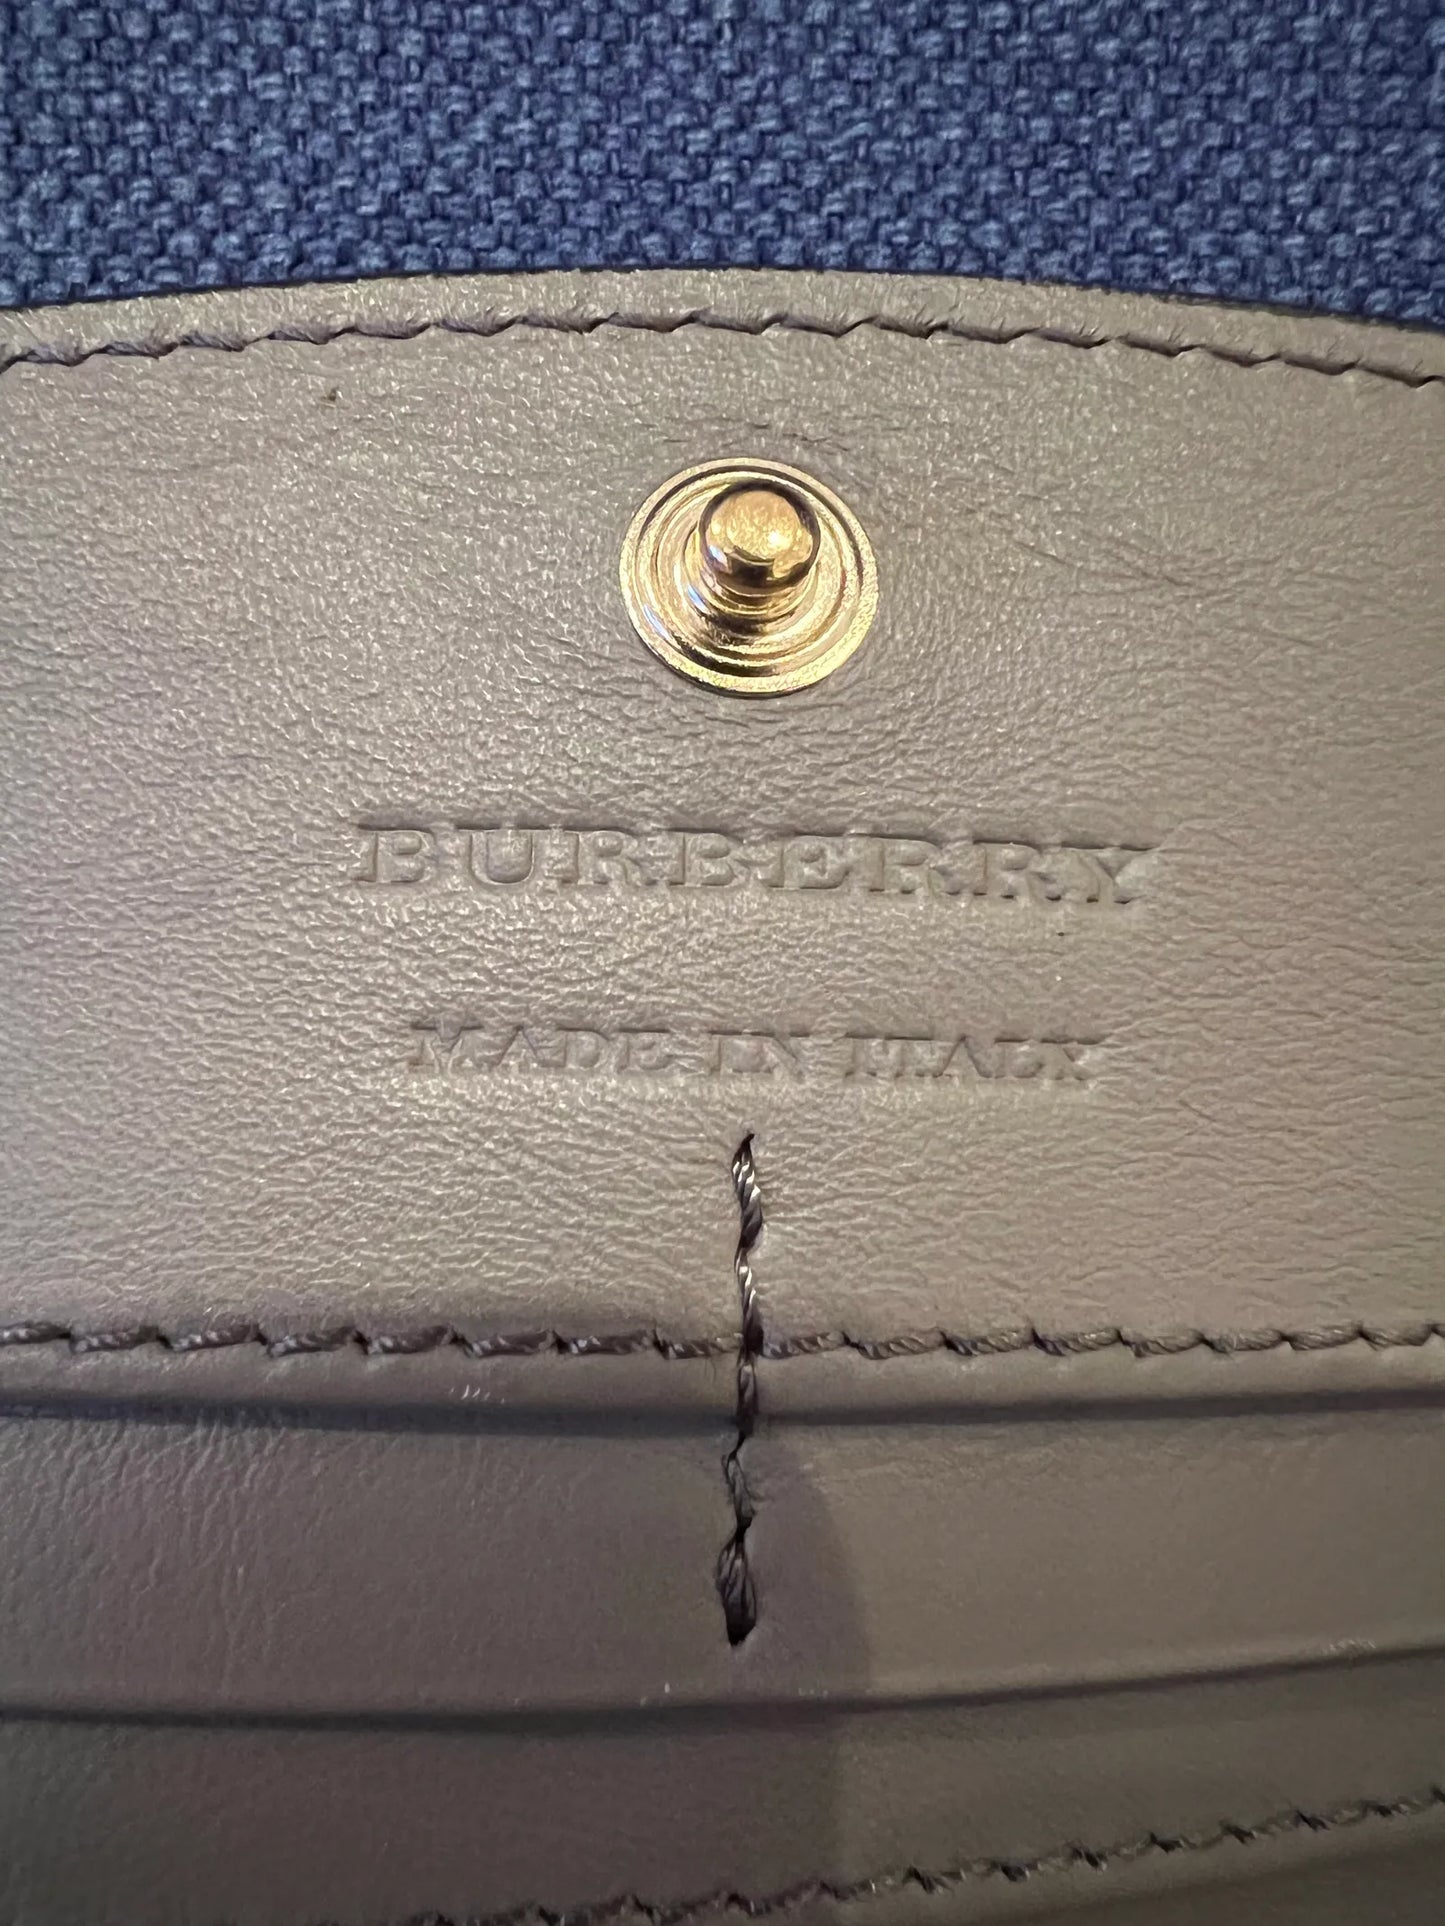 Burberry-plånbok